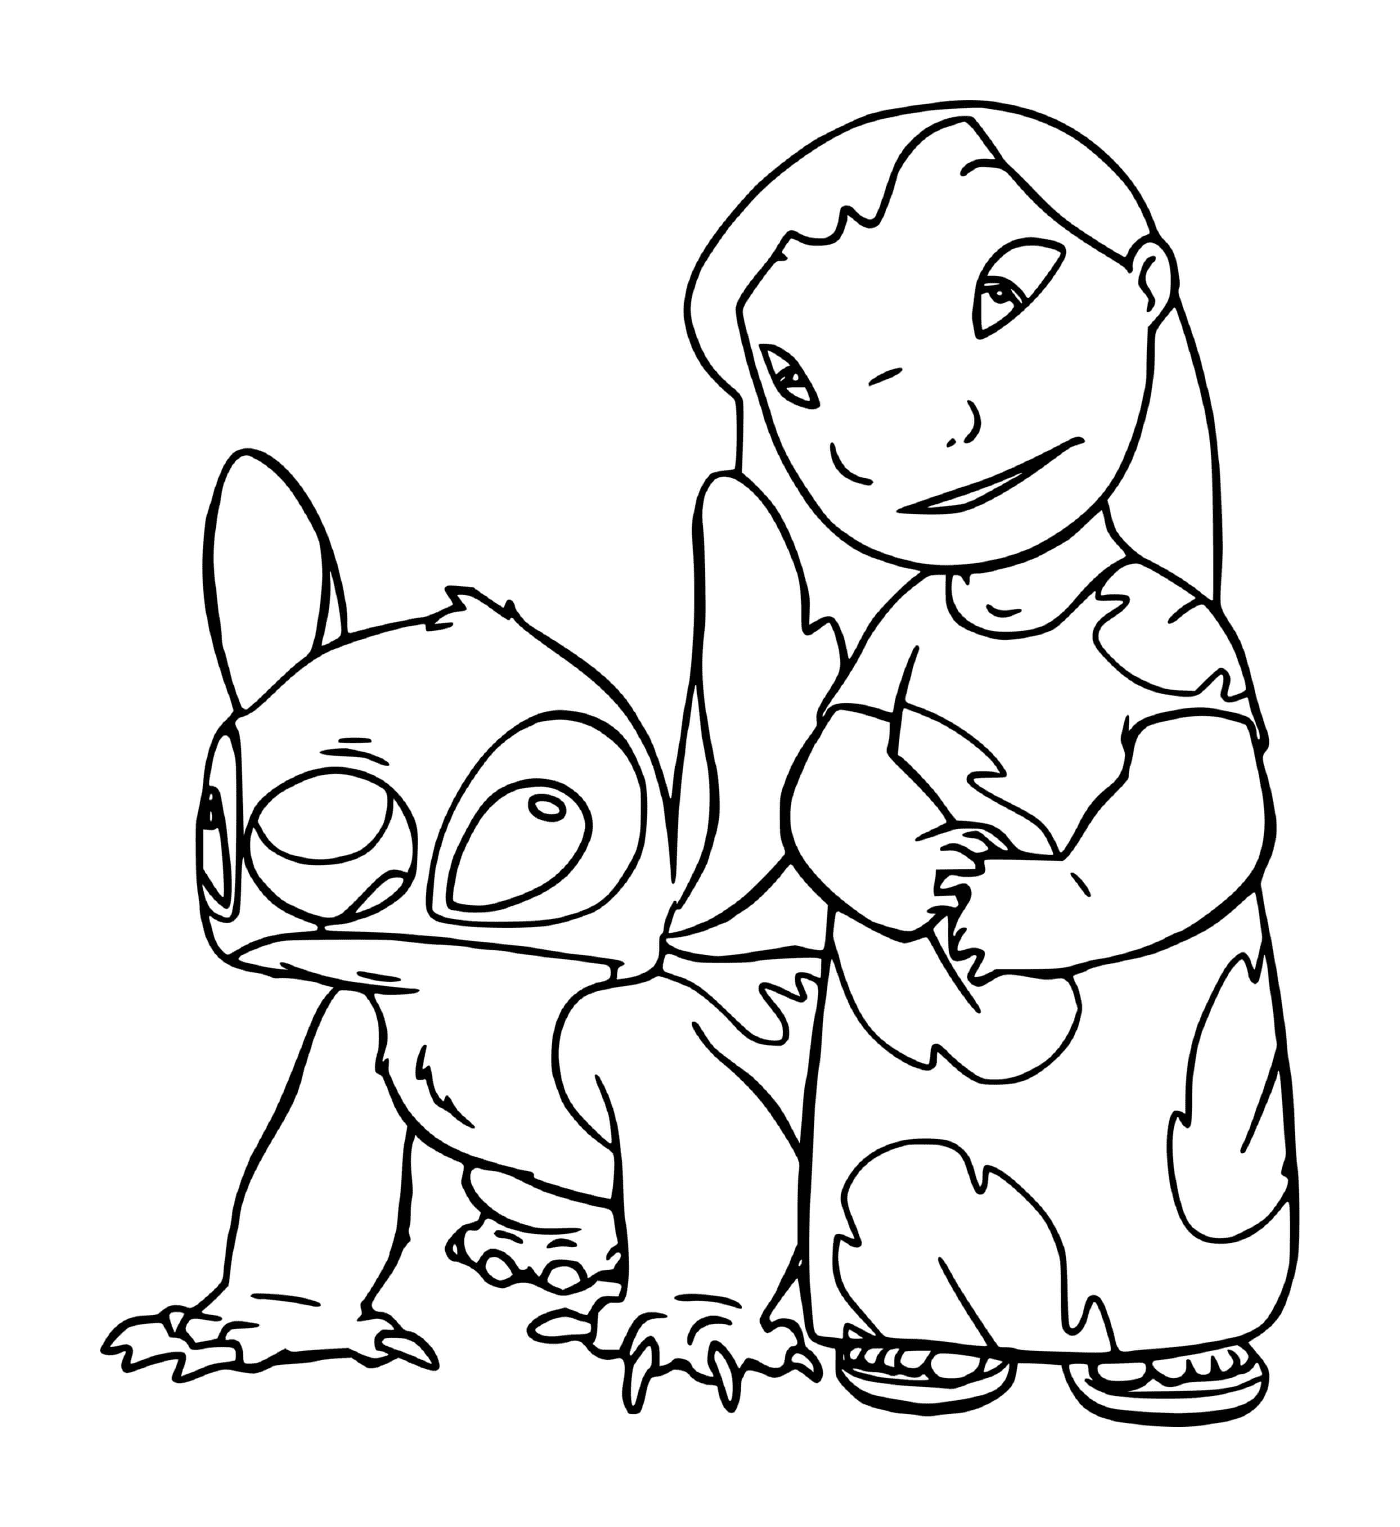  Stitch and Lilo in night pajamas 